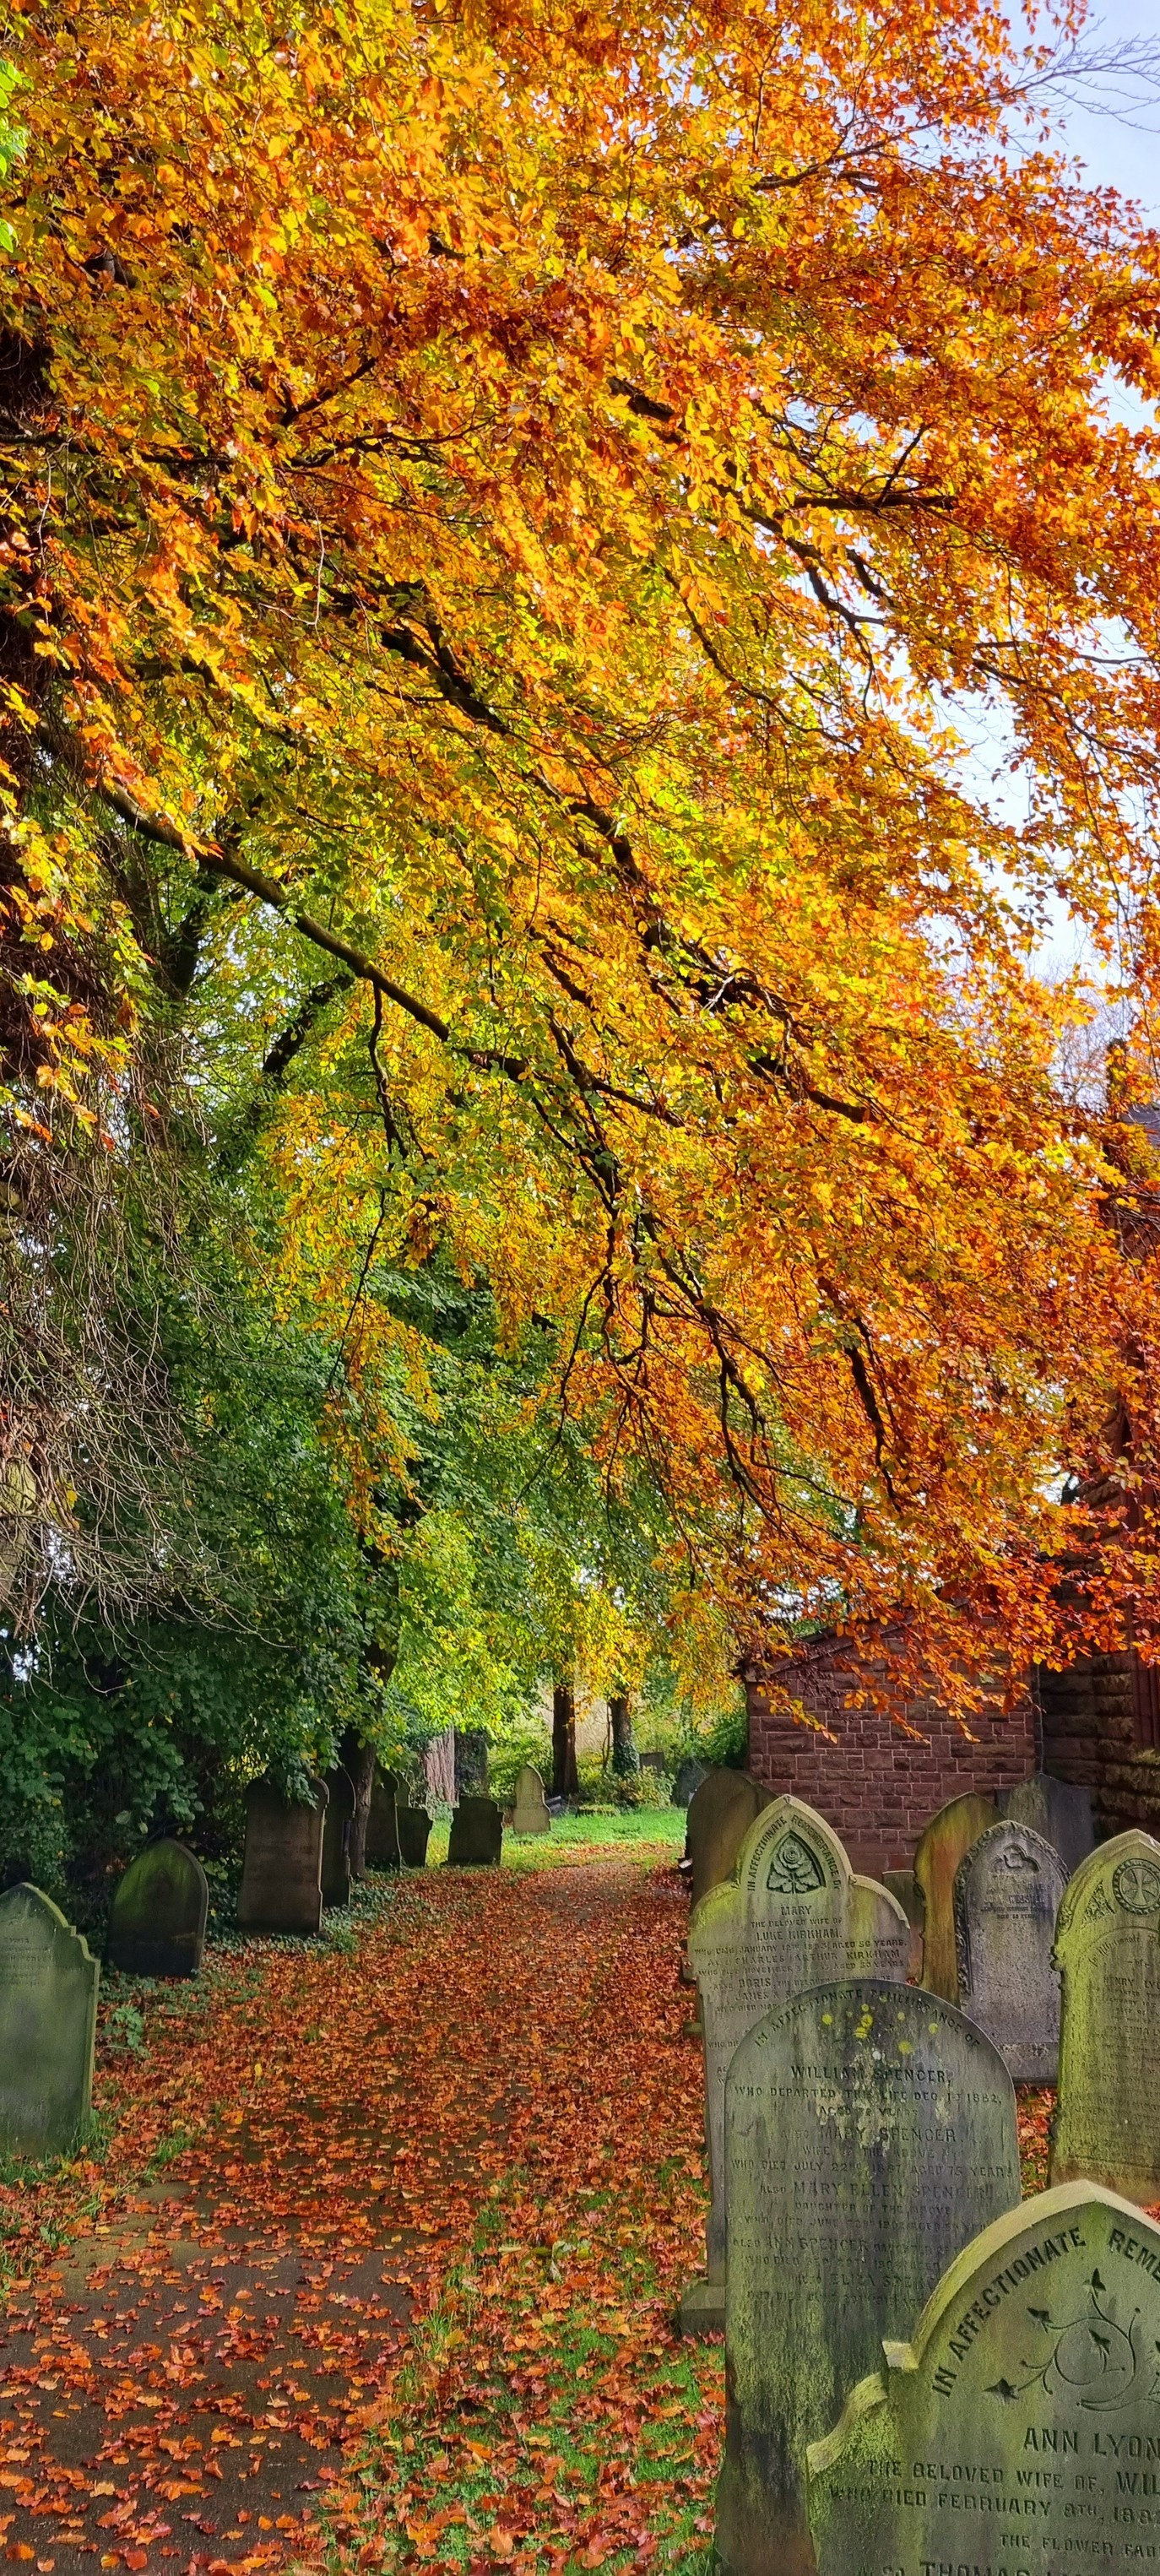 Autumn at Christ Church, Eccleston by Mike Horton